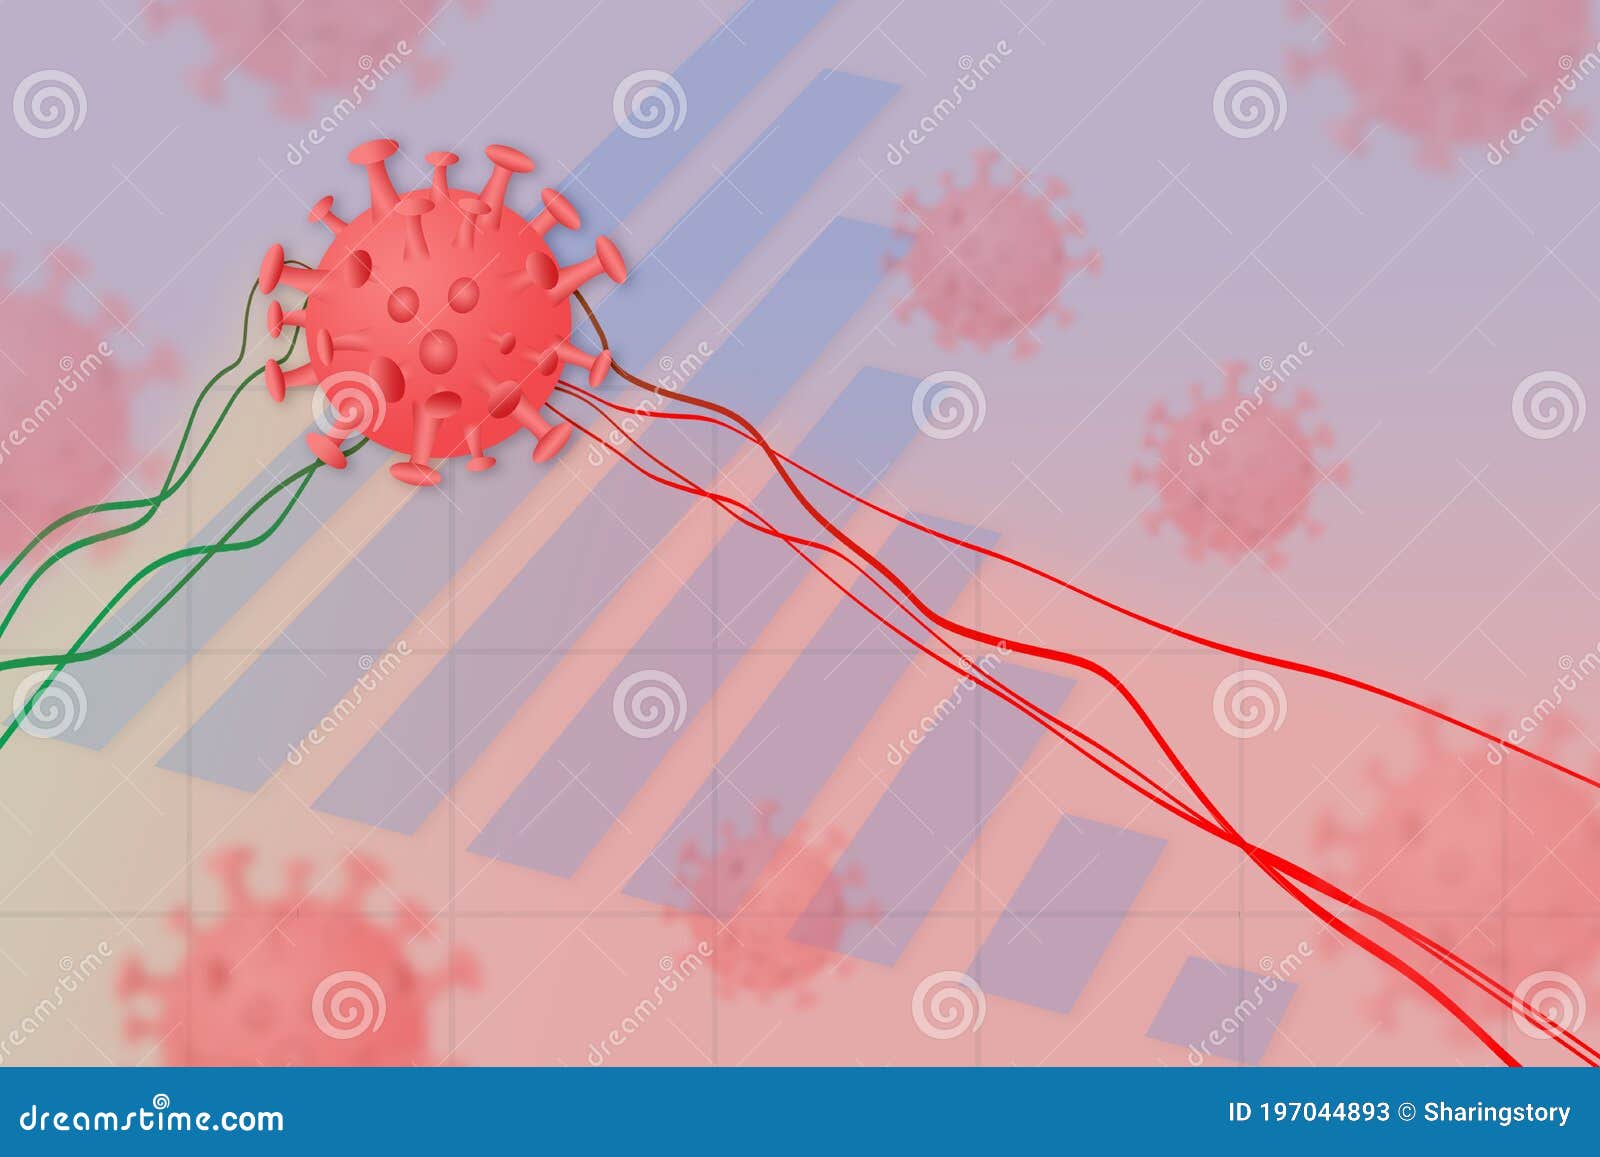 coronavirus disease covid-19 impact global economy stock markets financial crisis concept, 3d 